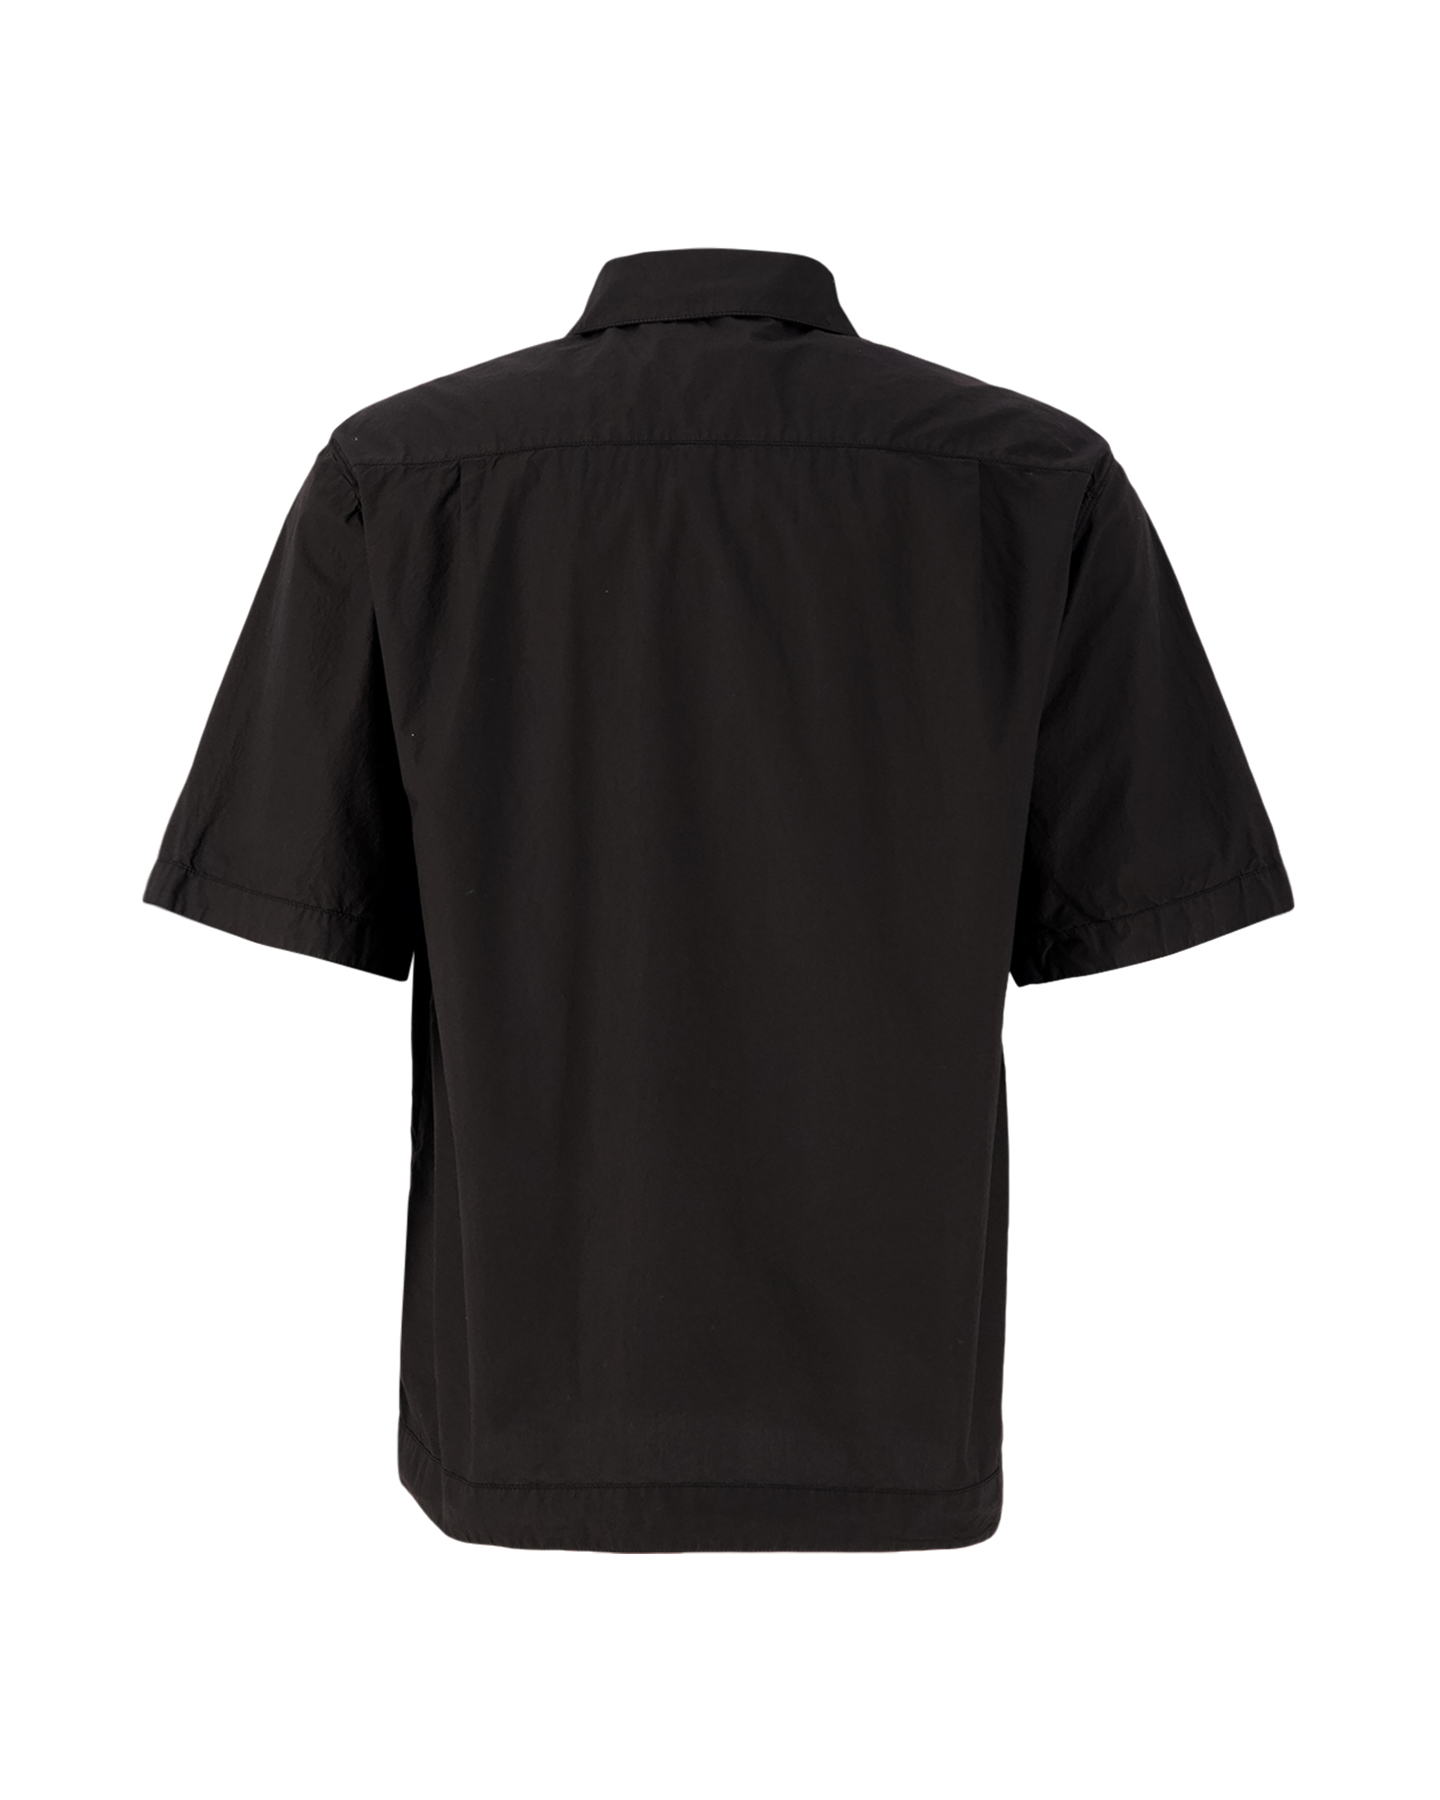 Stone Island 11805 Light Cotton Tela 'Paracadute' Garment Dyed Short Sleeve Shirt BLACK 2